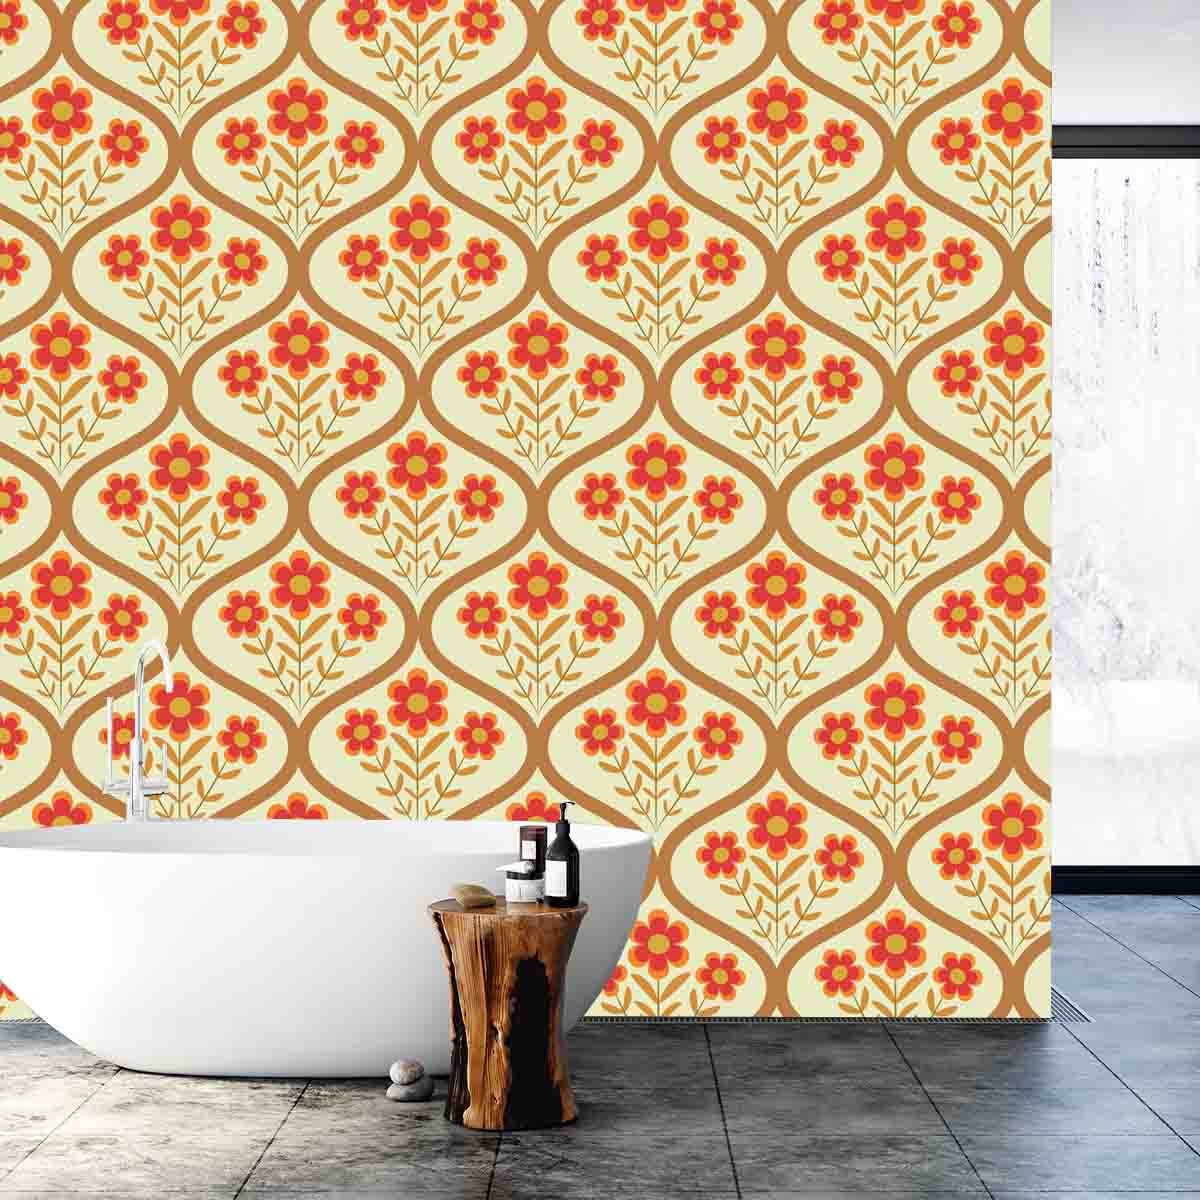 Beautiful Retro Vintage Red Flowers in Big Ogee Oval Shape Seamless Pattern Wallpaper Bathroom Mural